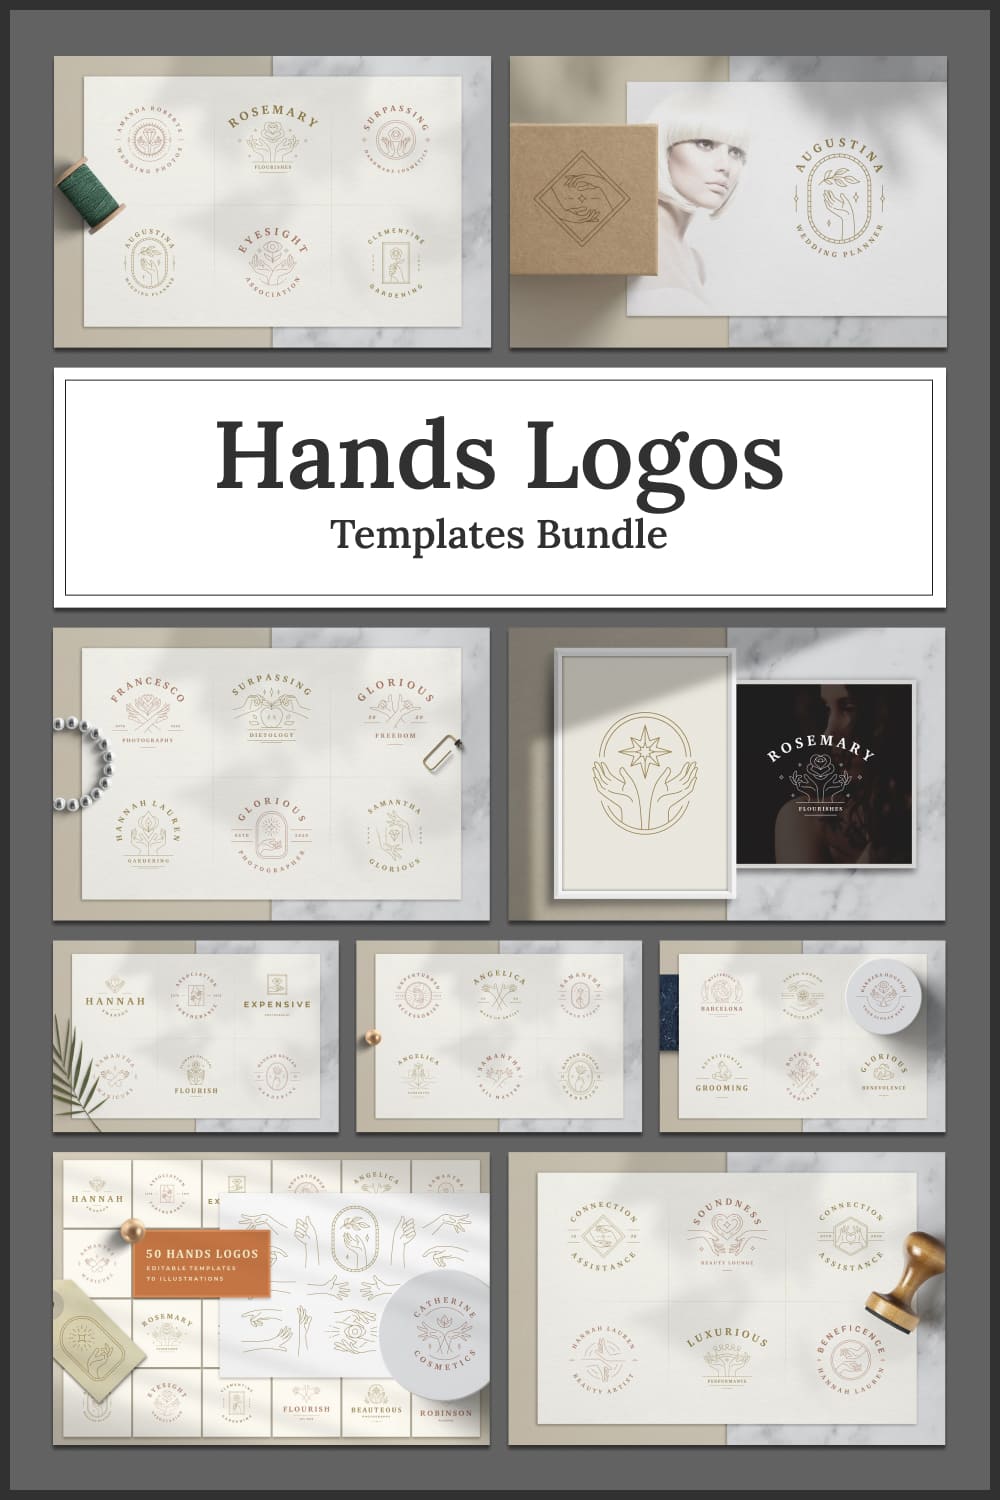 Hands Logos Editable Templates And Illustrations Bundle pinterest image.